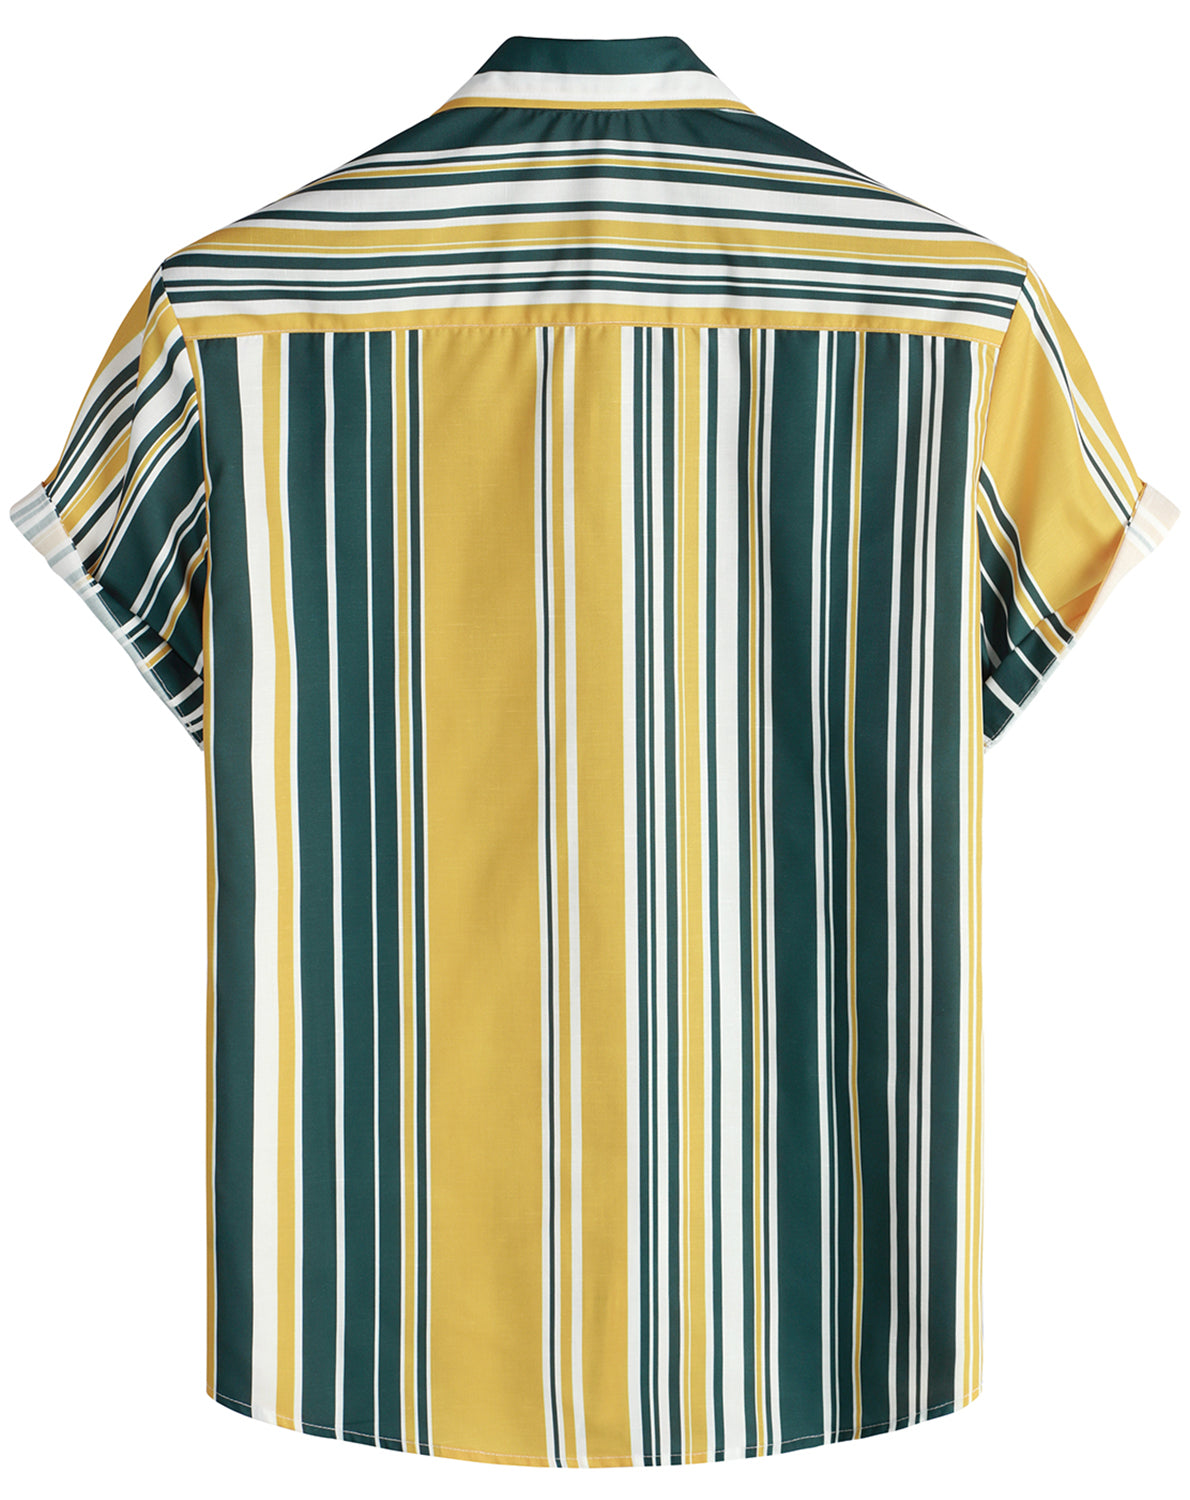 VATPAVE Mens Striped Hawaiian Shirts Casual Button Down Short Sleeve Summer Shirts